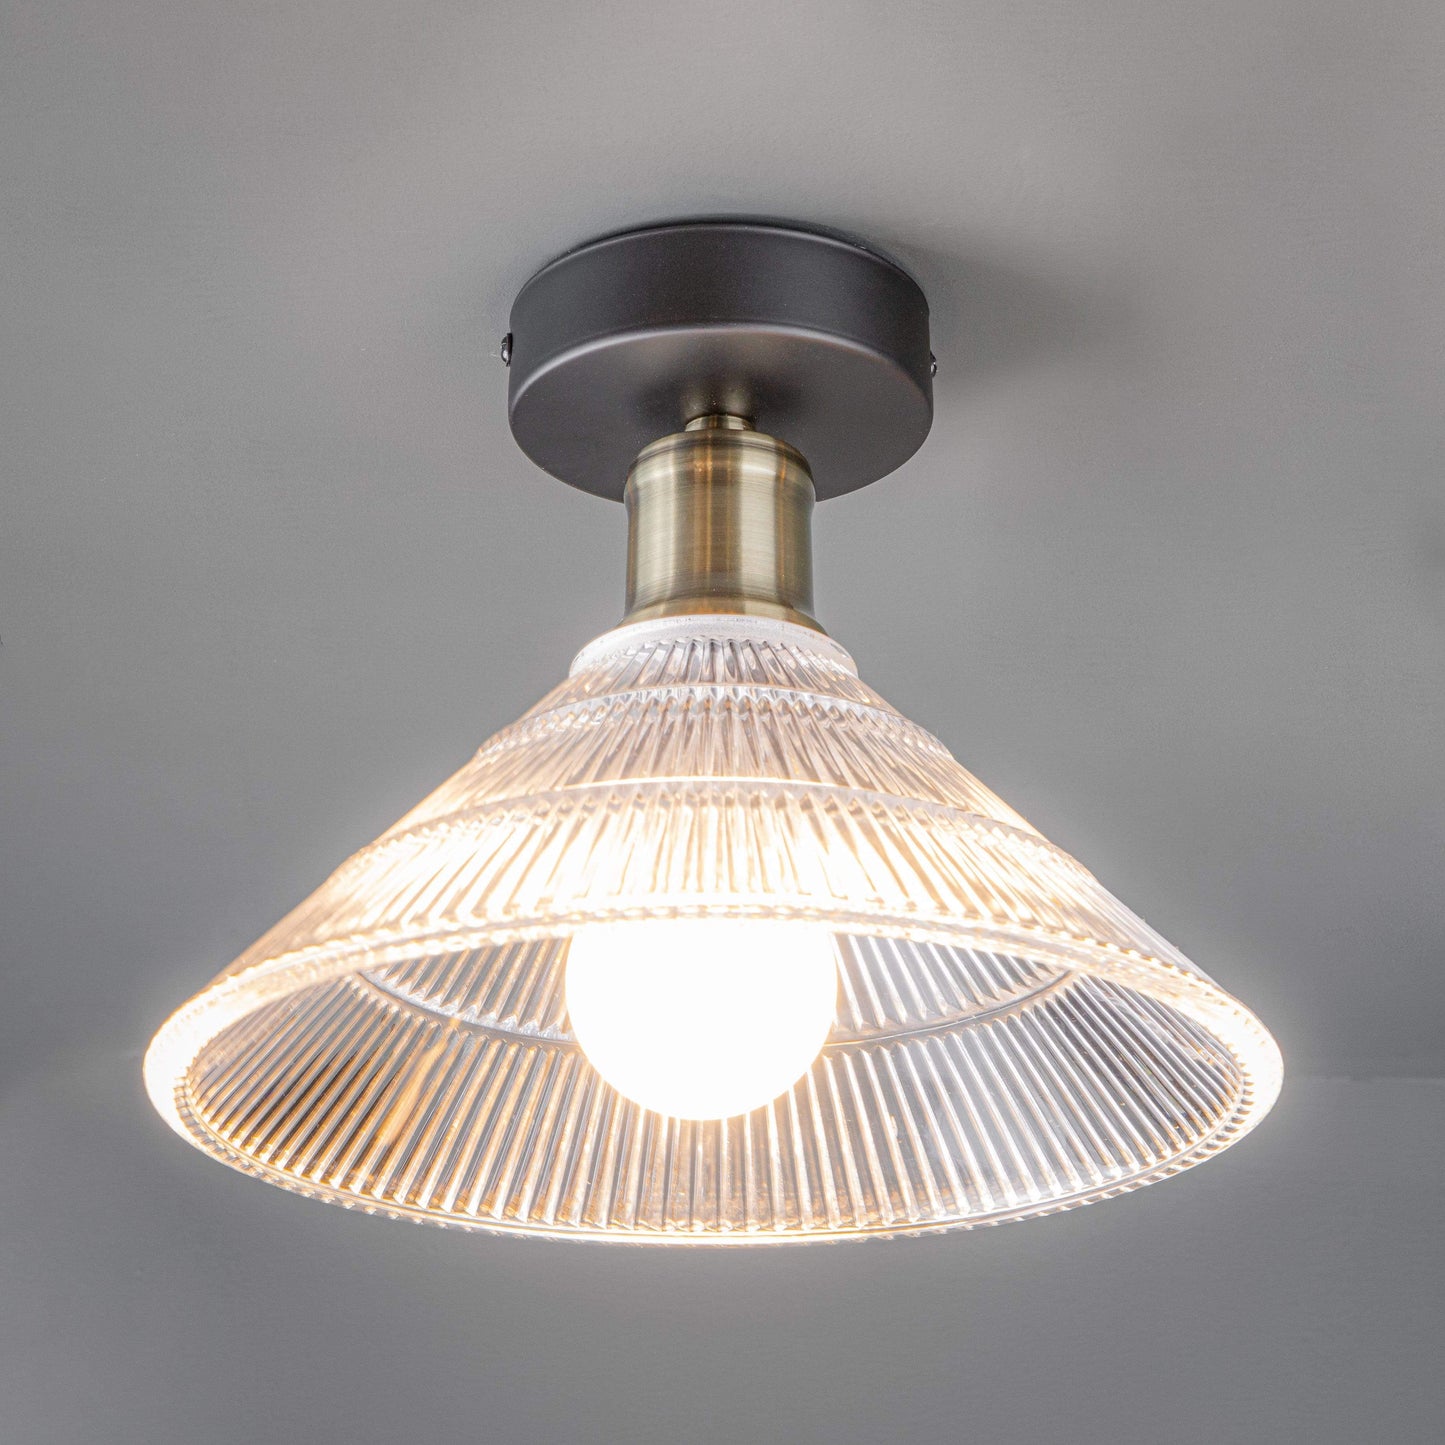 Lights  -  1 Light Flush Ceiling Light In Antique Brass With Glass Shade Ceiling light  -  50155801